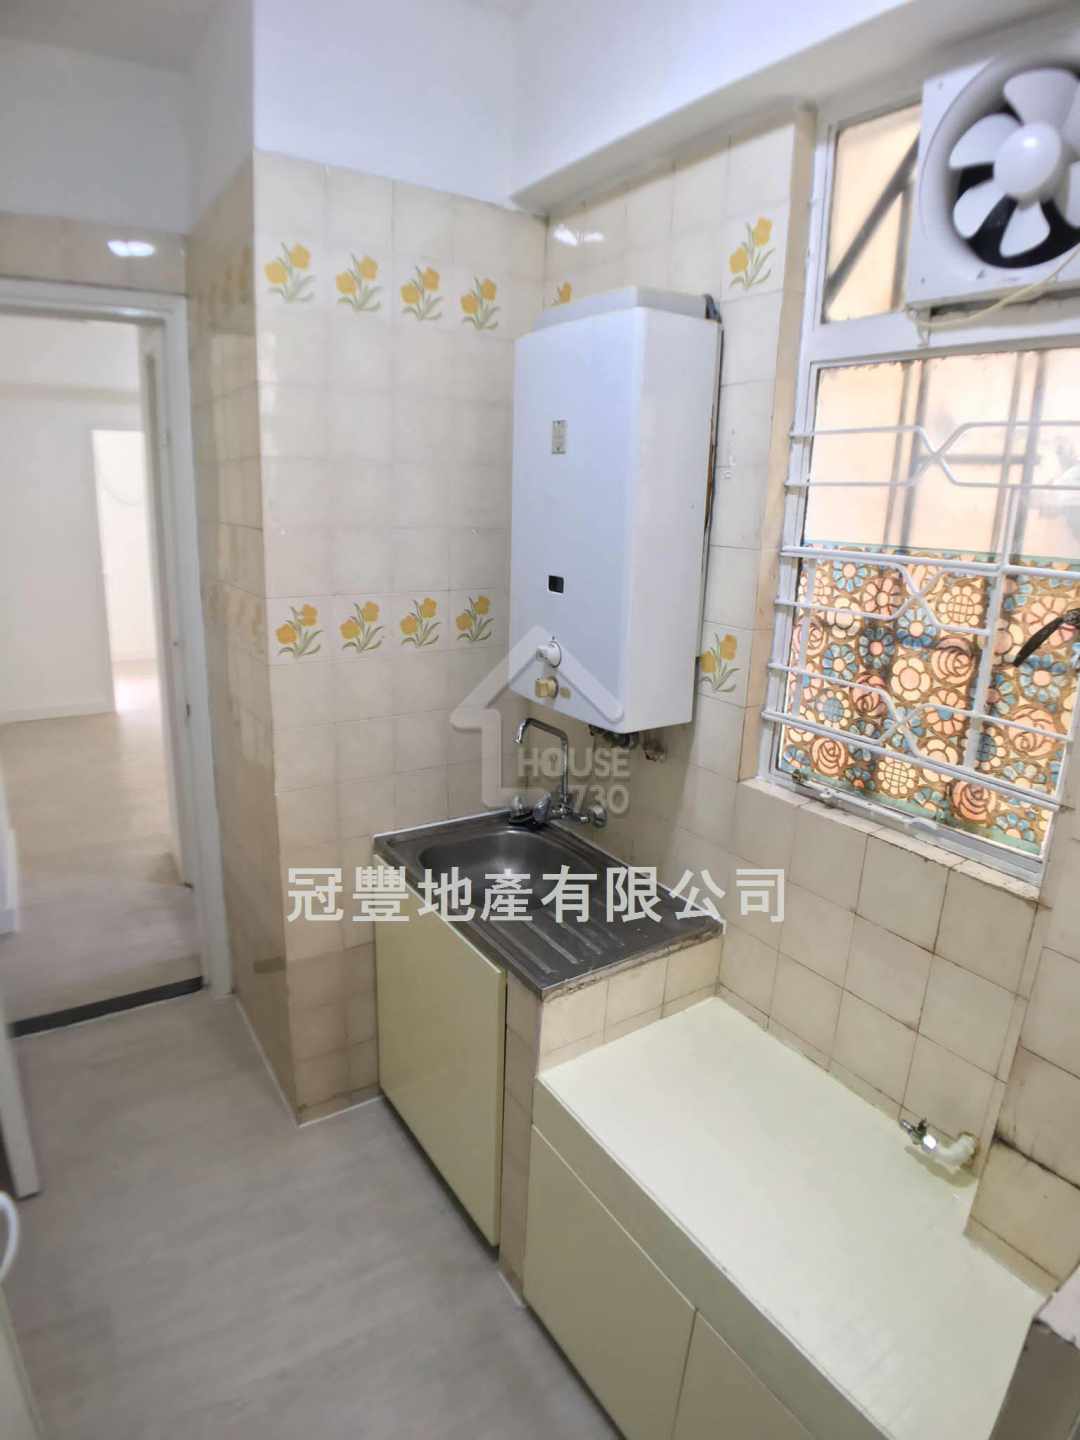 Sham Shui Po WANG TAK HOUSE Lower Floor House730-6864458